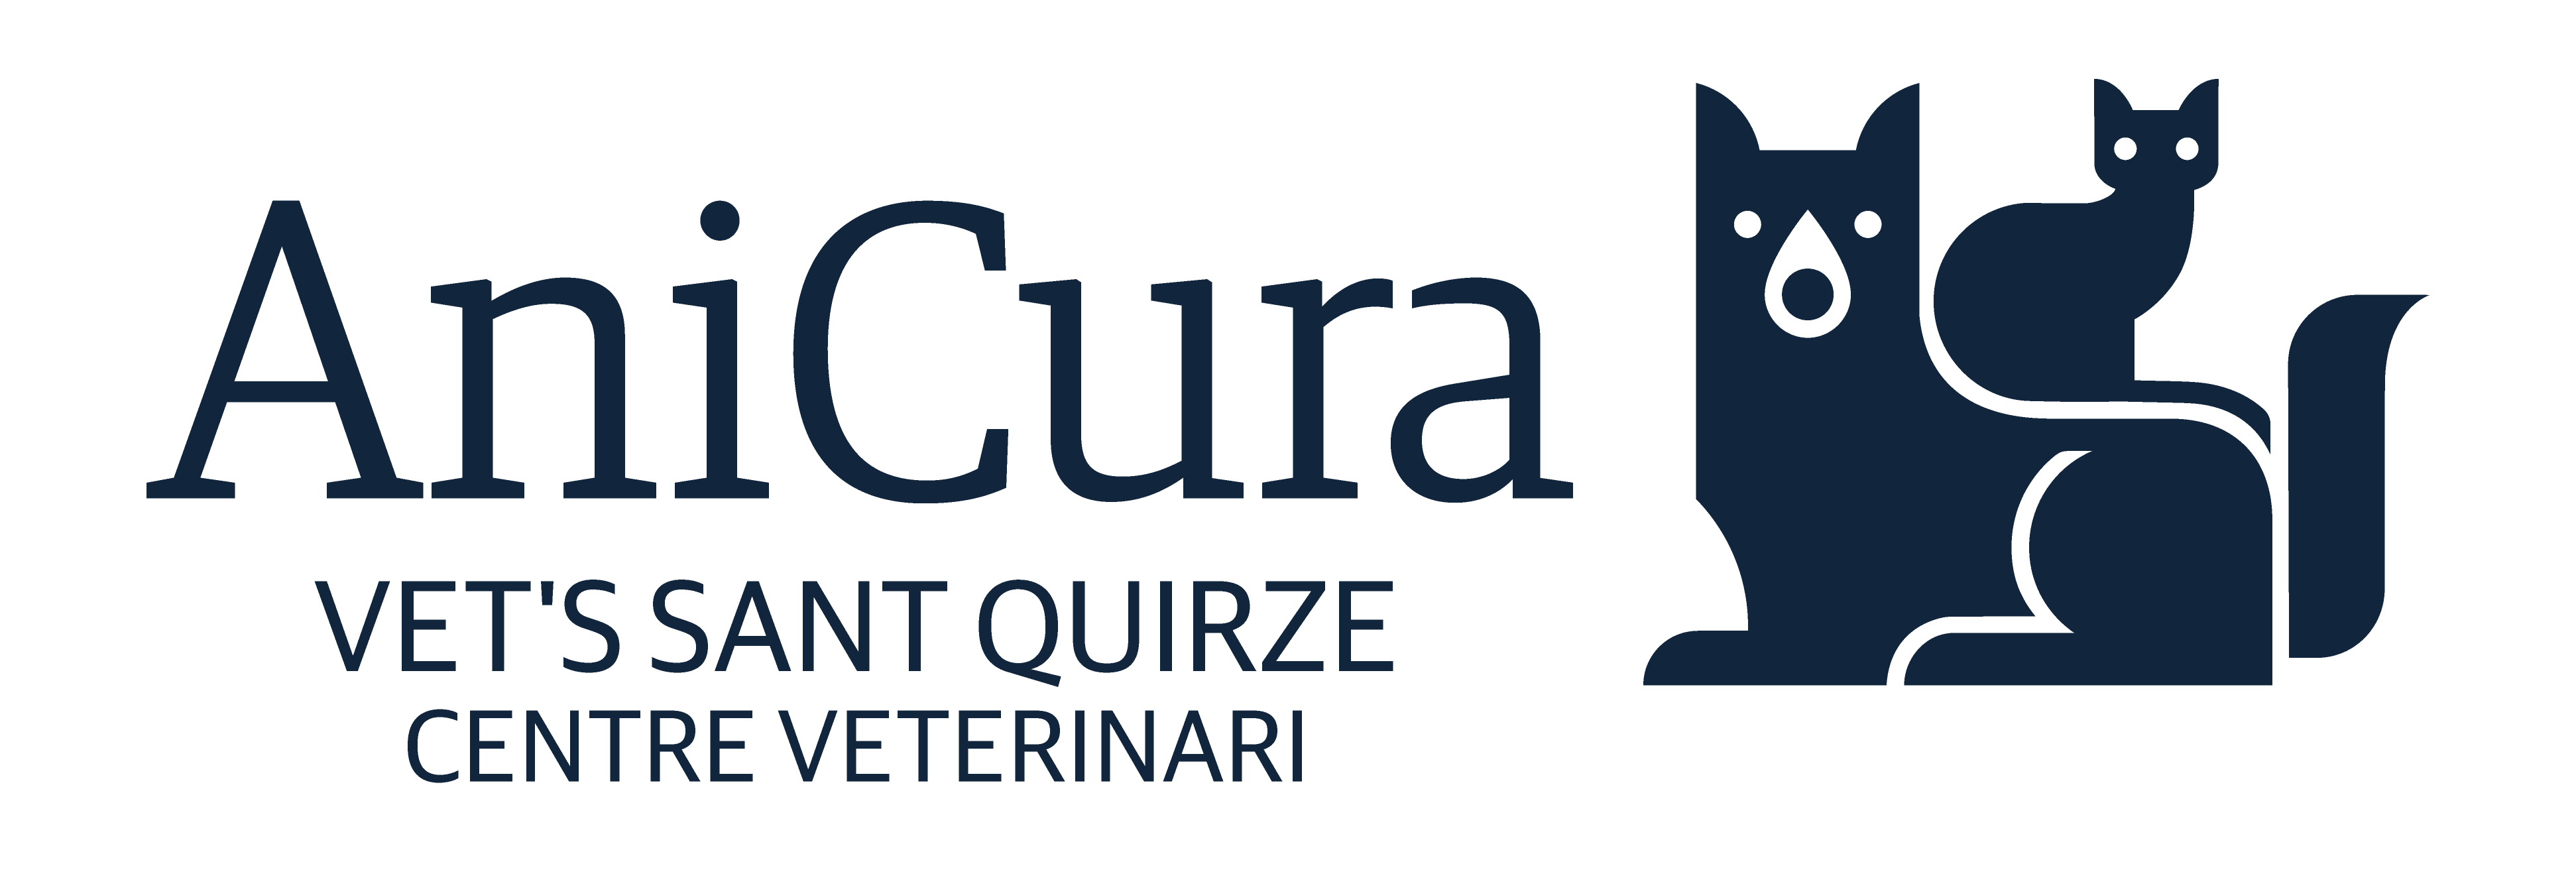 AniCura Vet's Sant Quirze Centre Veterinari logo